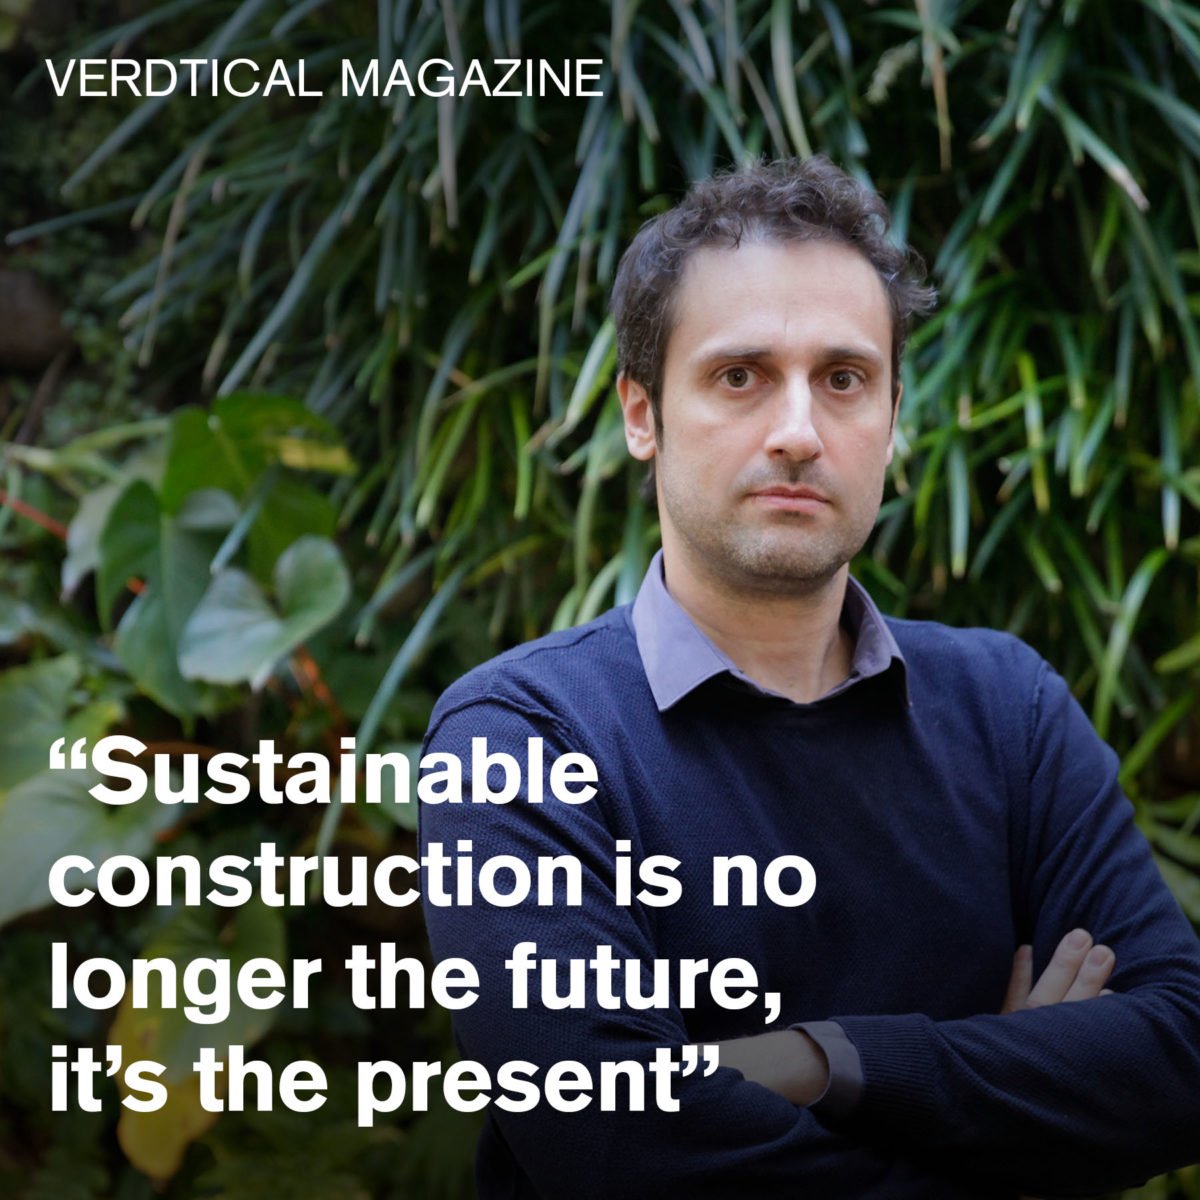 Interview with Eduardo Gutiérrez for Verdtical Magazine